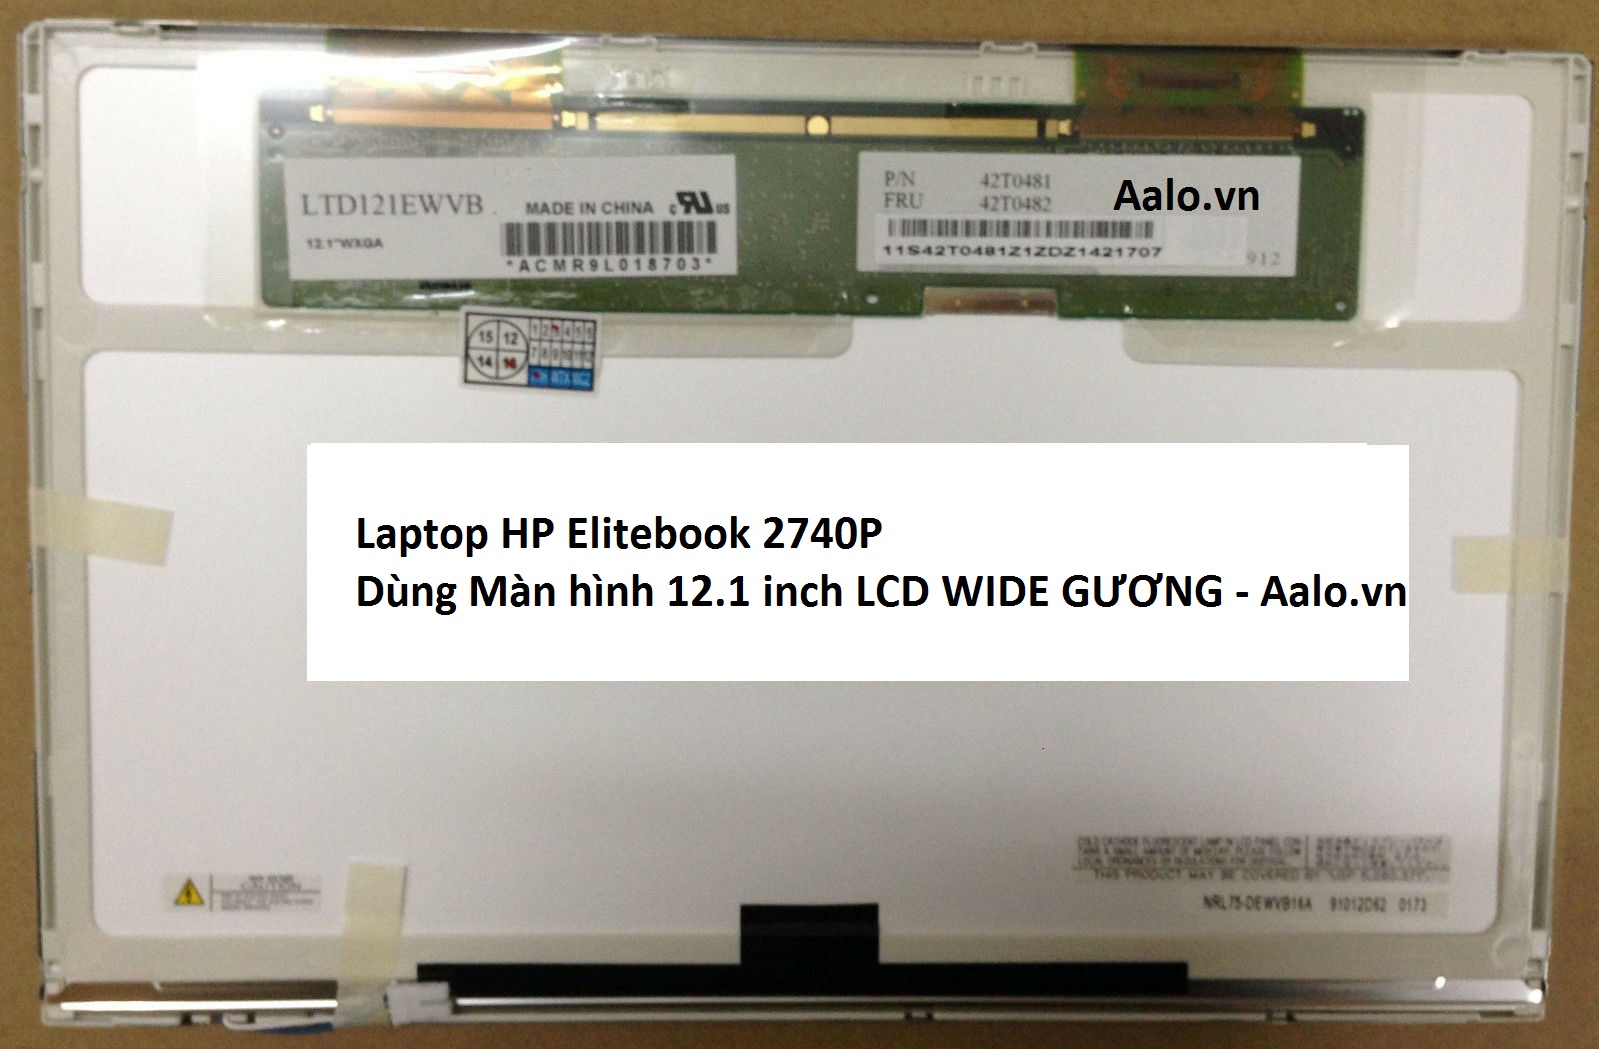 Màn hình Laptop HP Elitebook 2740P - Aalo.vn